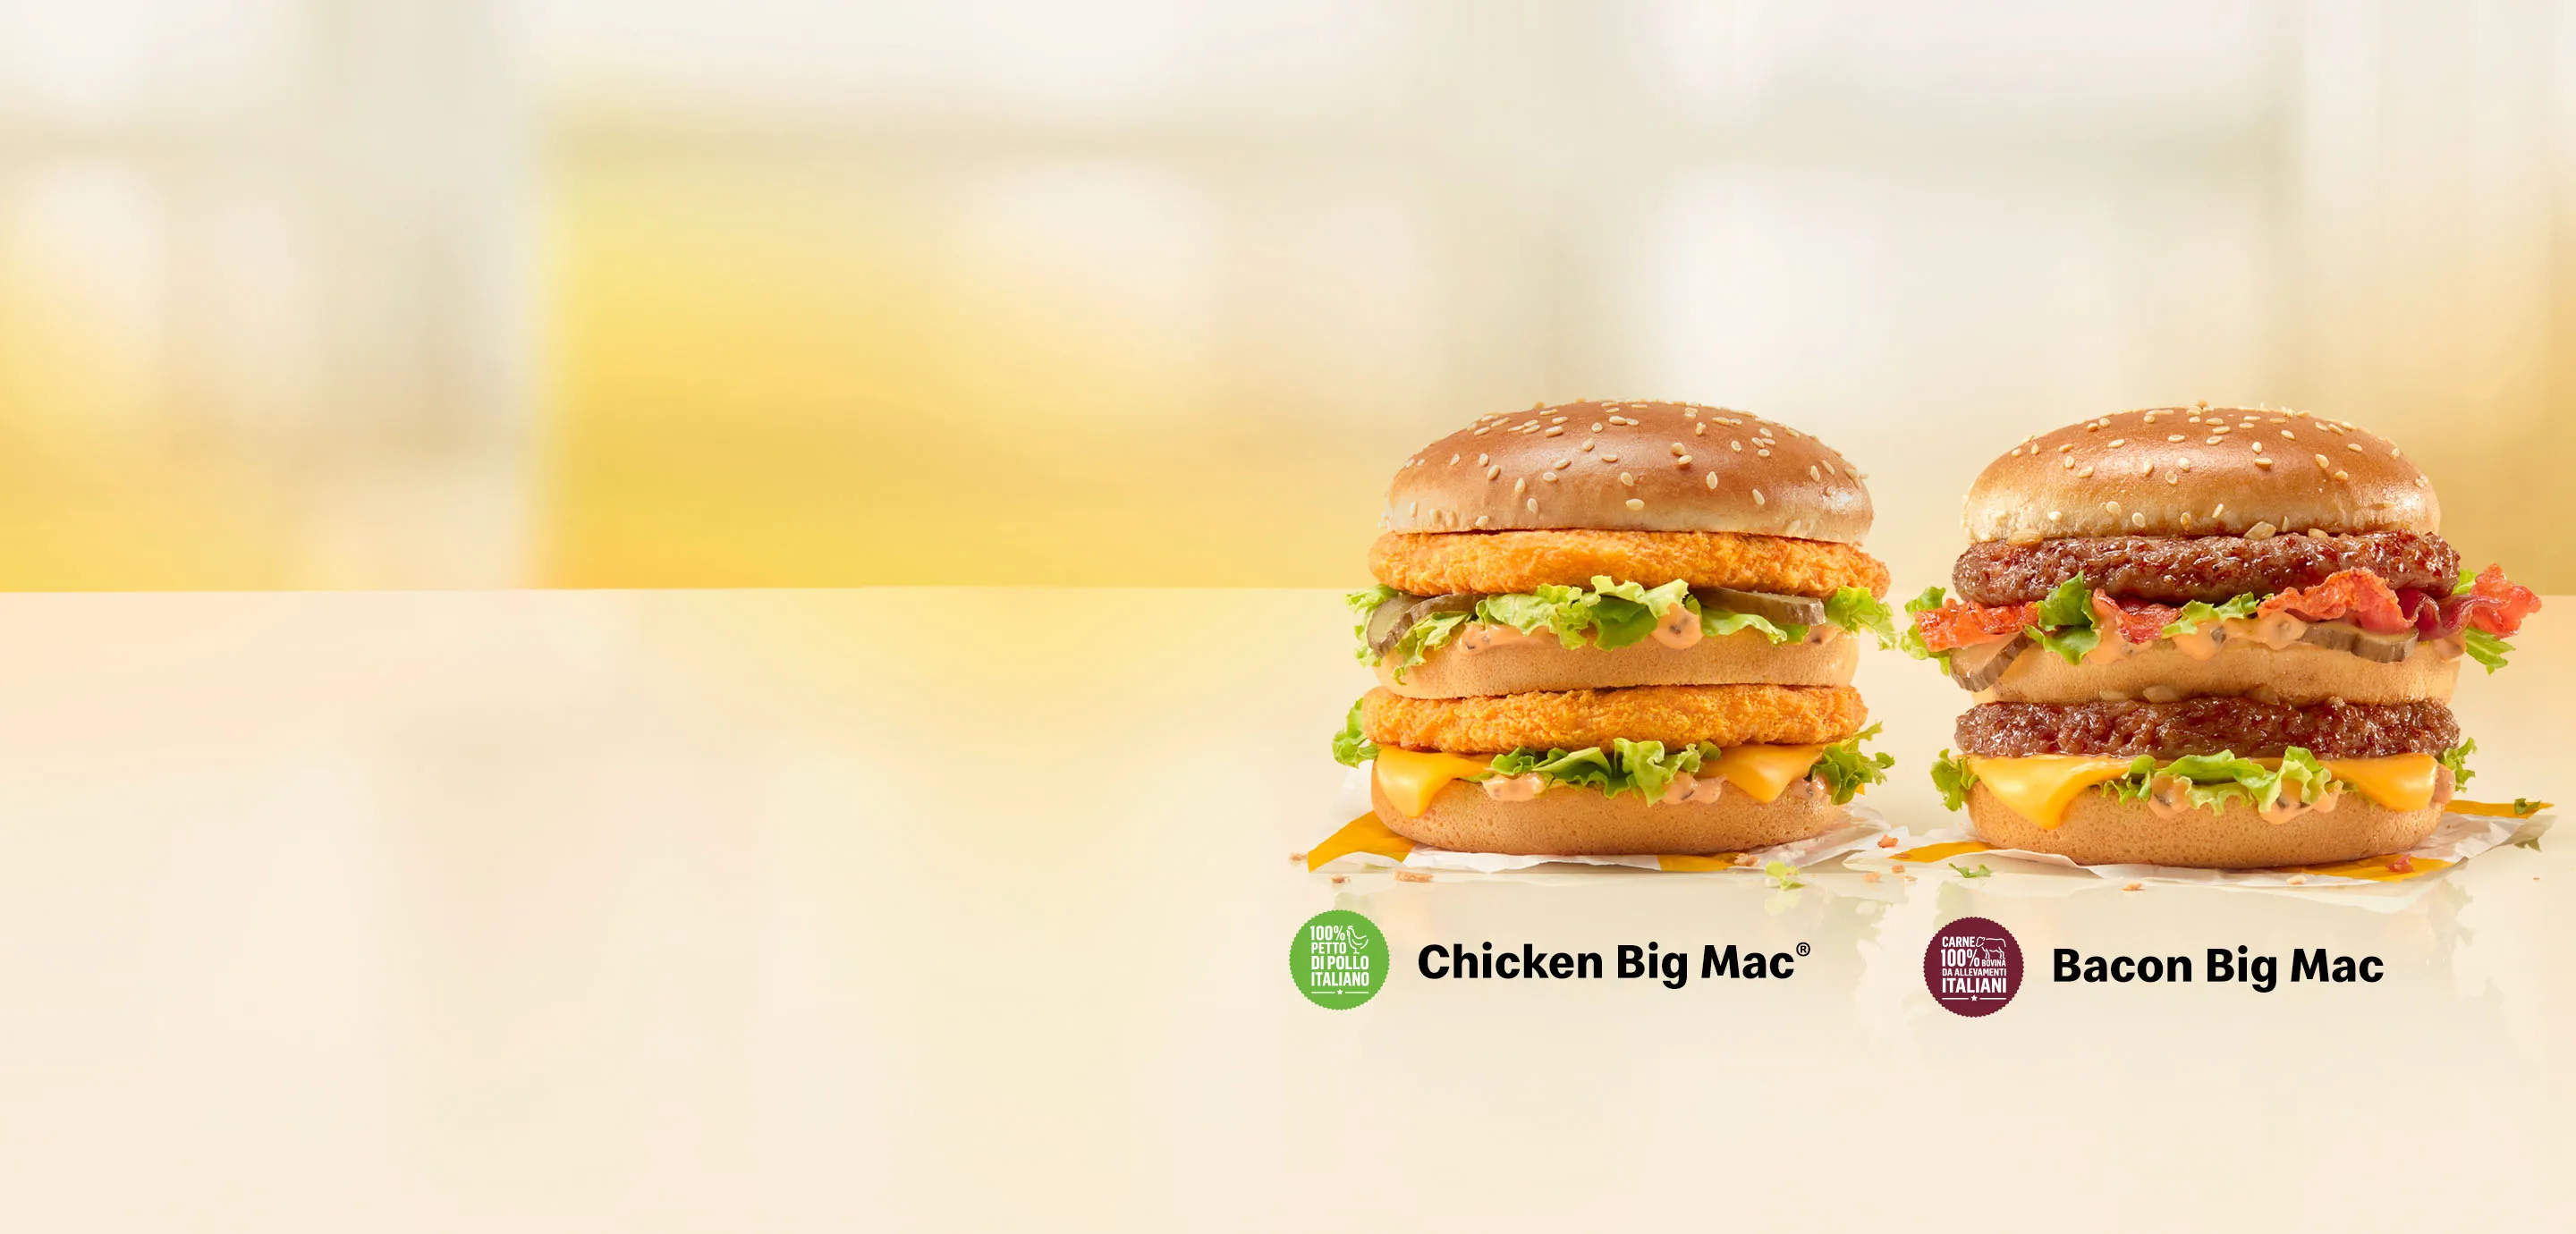 Un Big Mac® con pollo o bacon è ancora un Big Mac®?